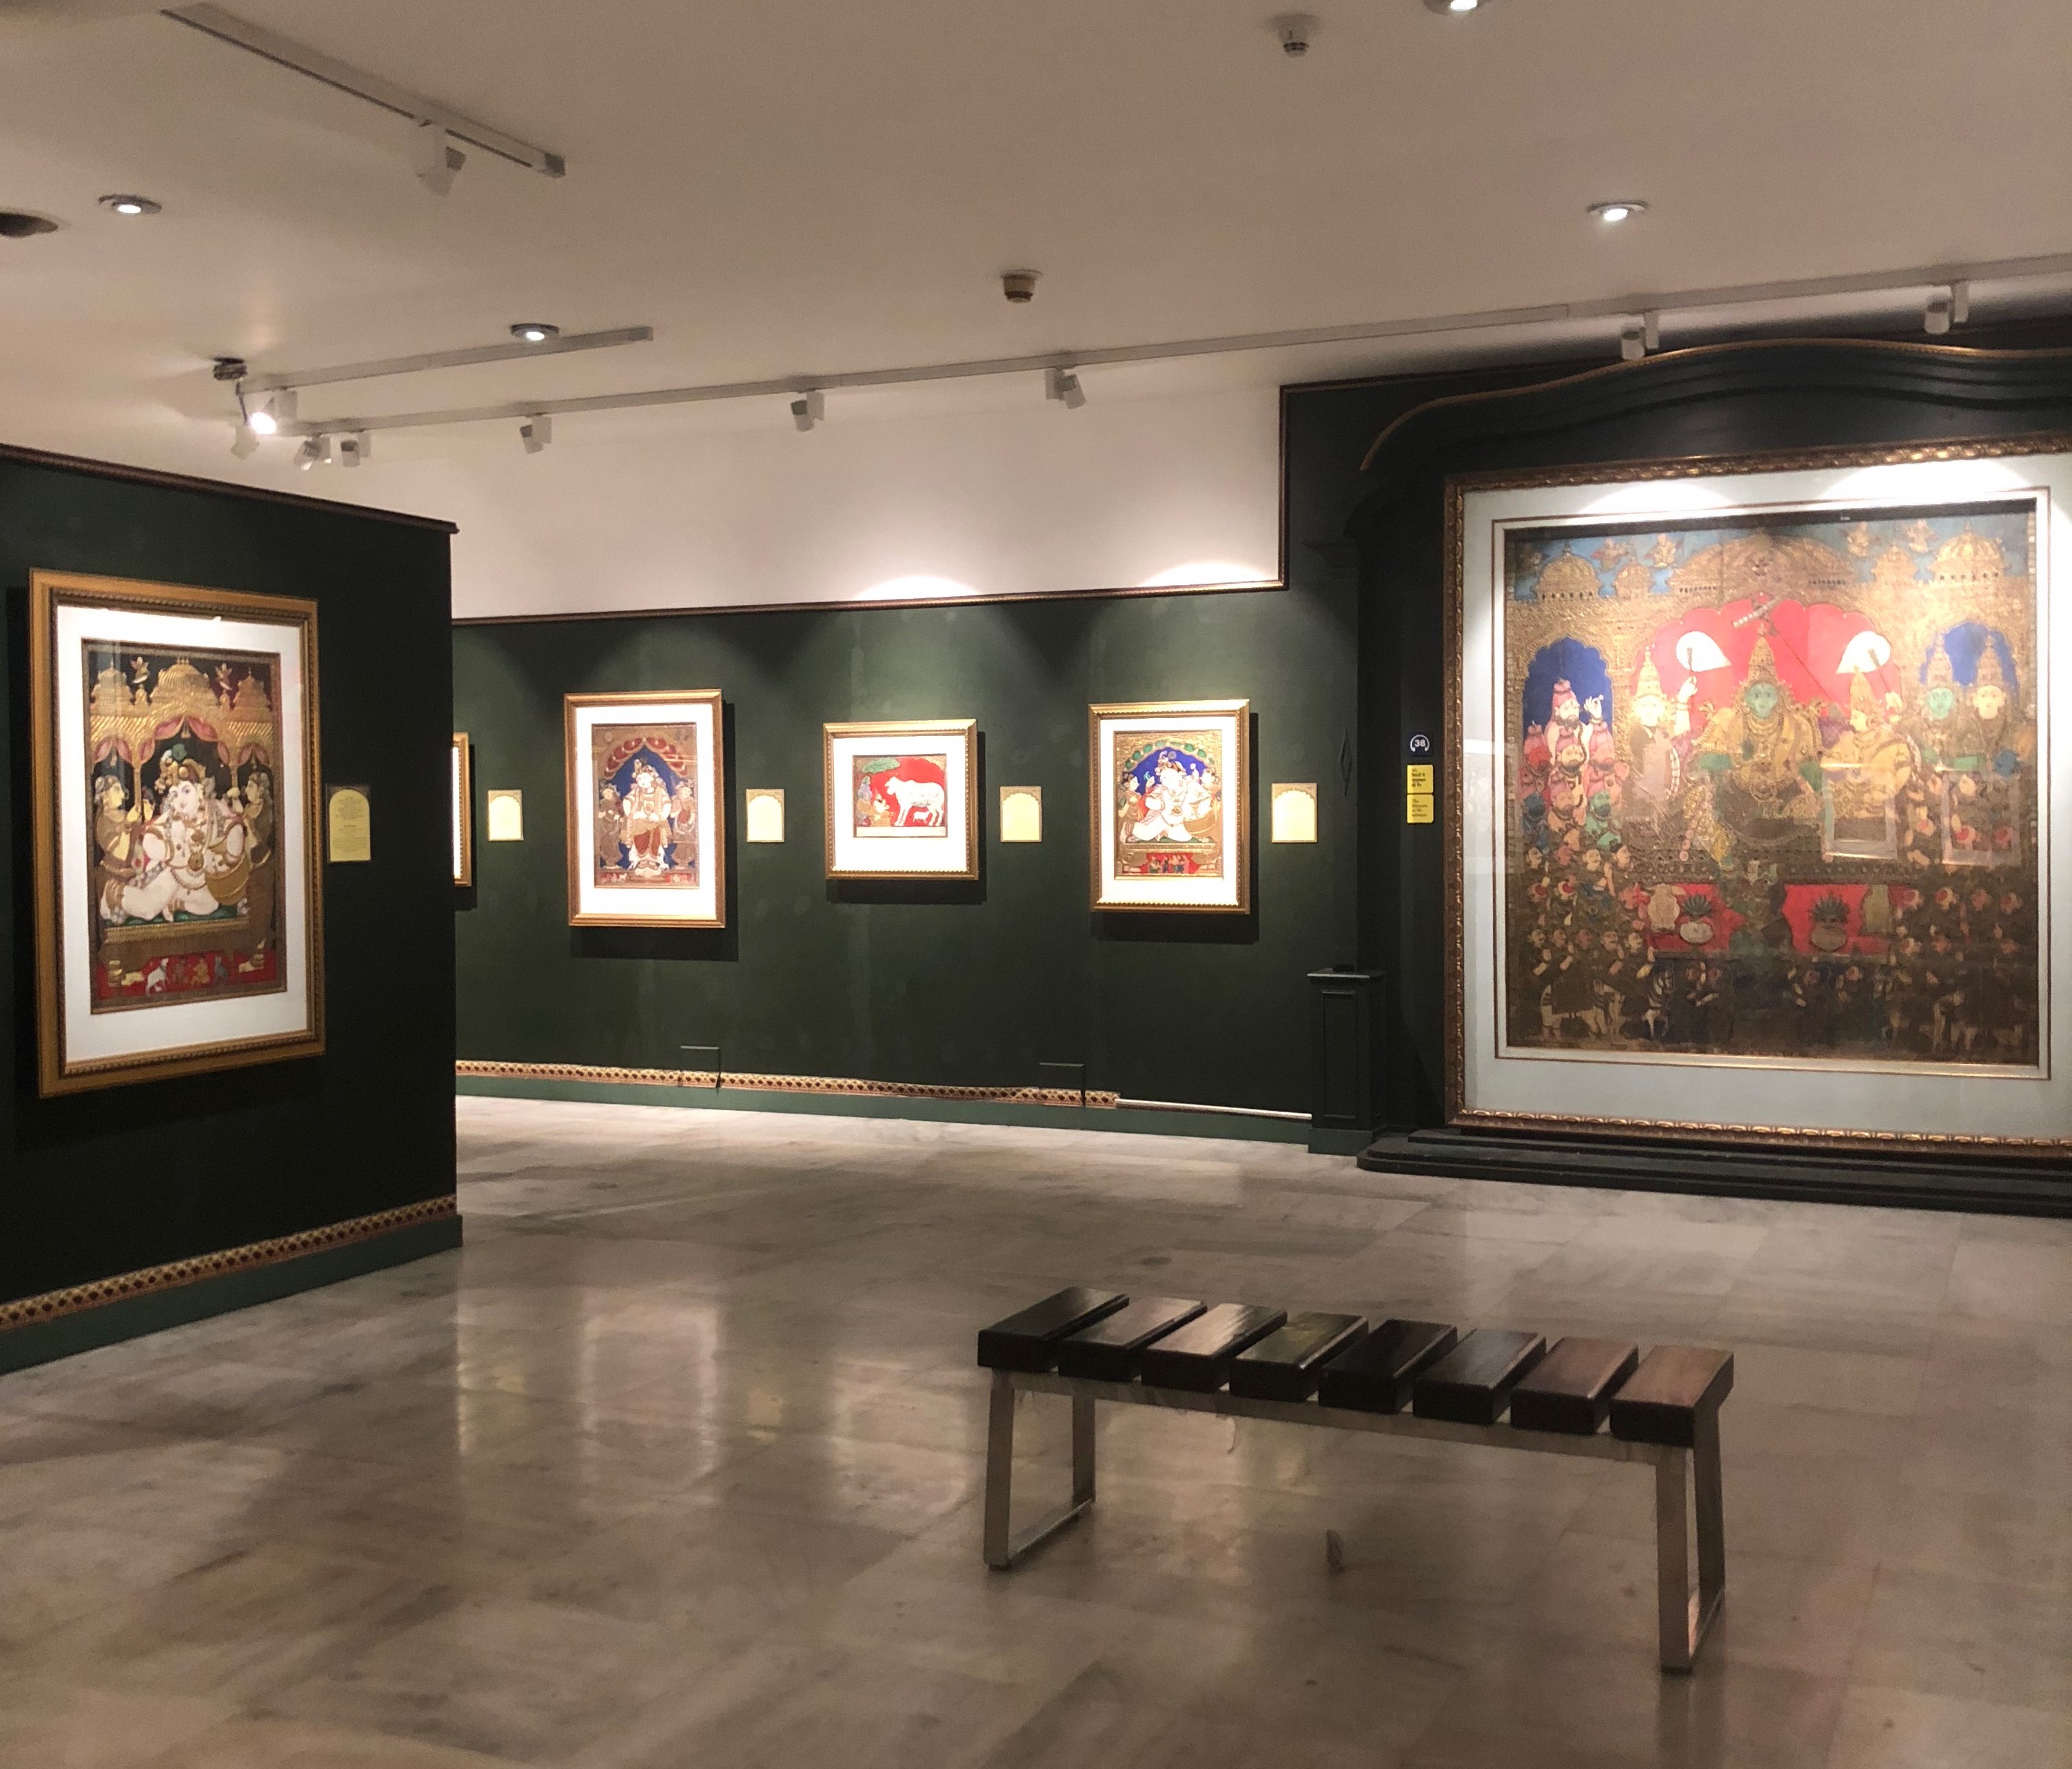 The National Gallery of Modern Art in New Delhi